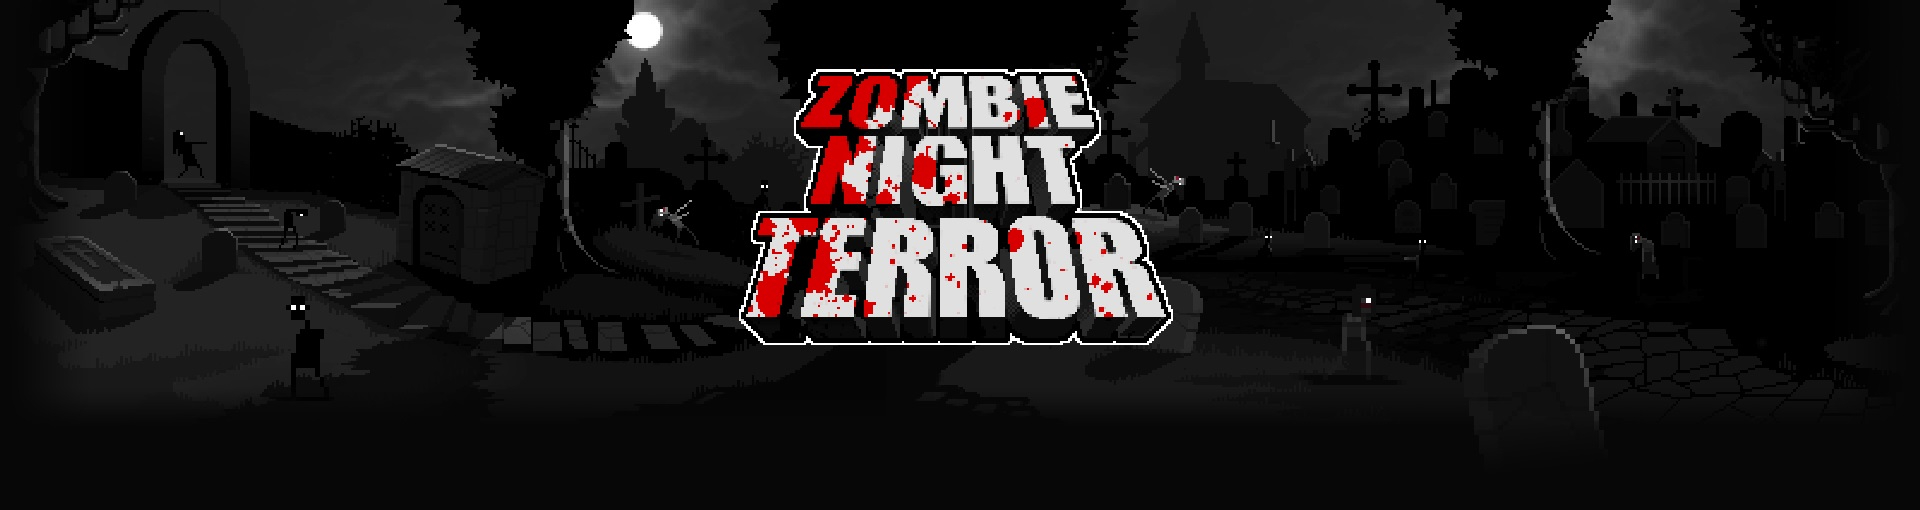 zombie night terror.